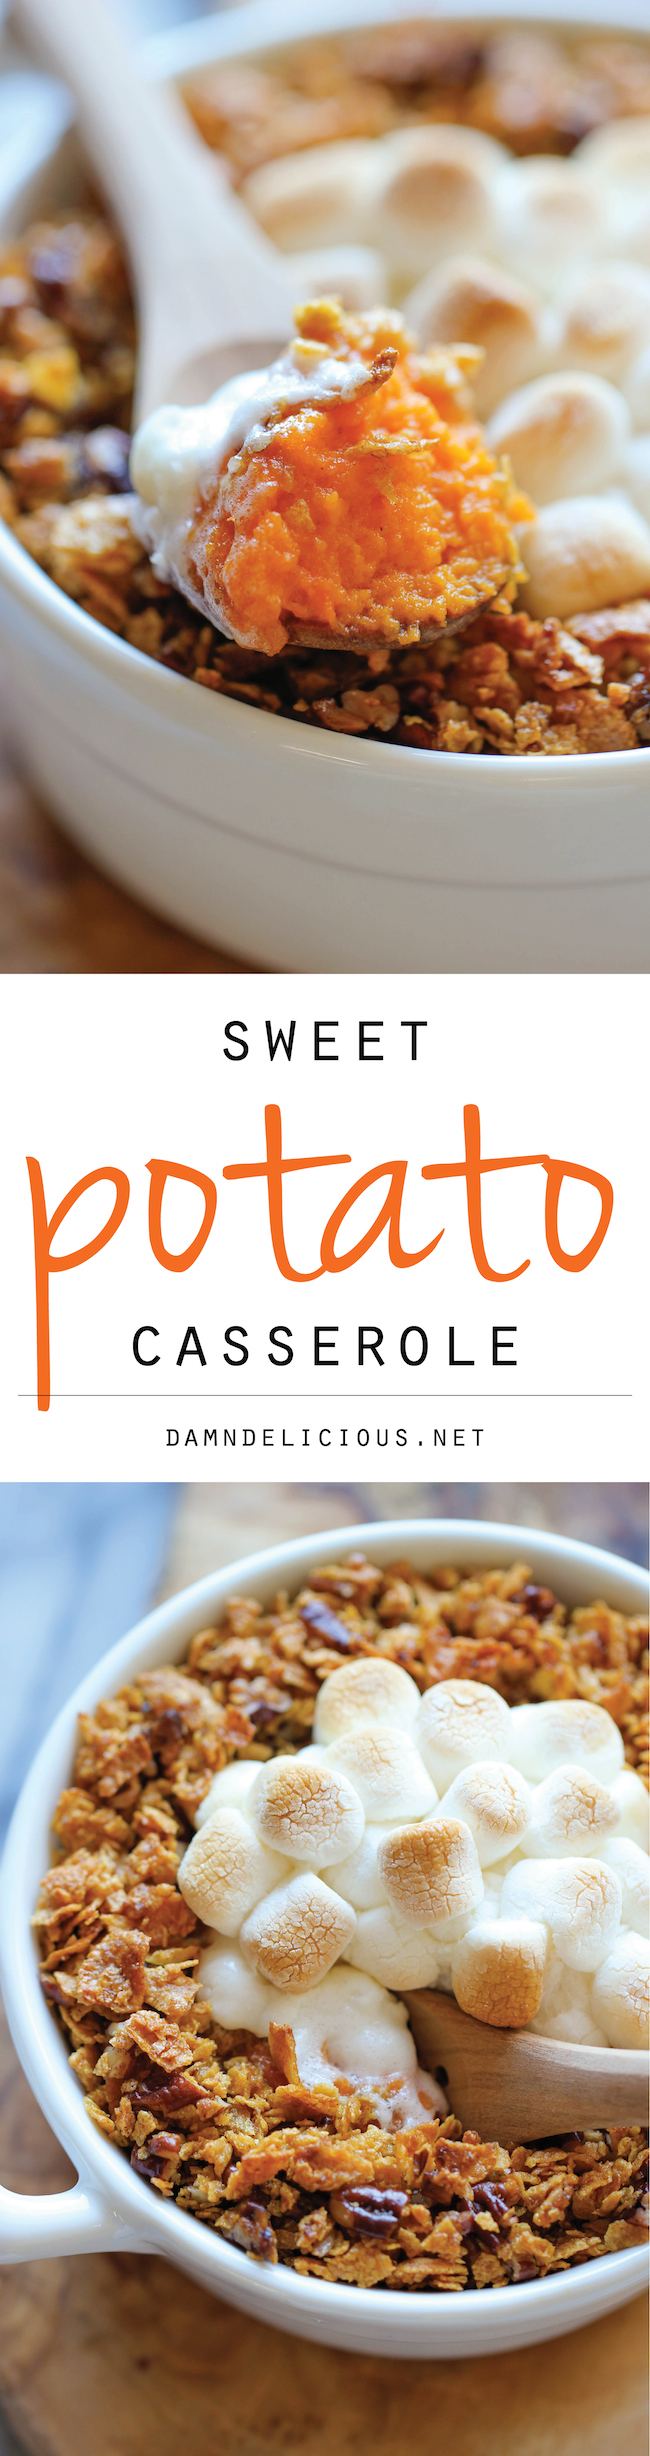 Slow Cooker Sweet Potato Casserole - Damn Delicious